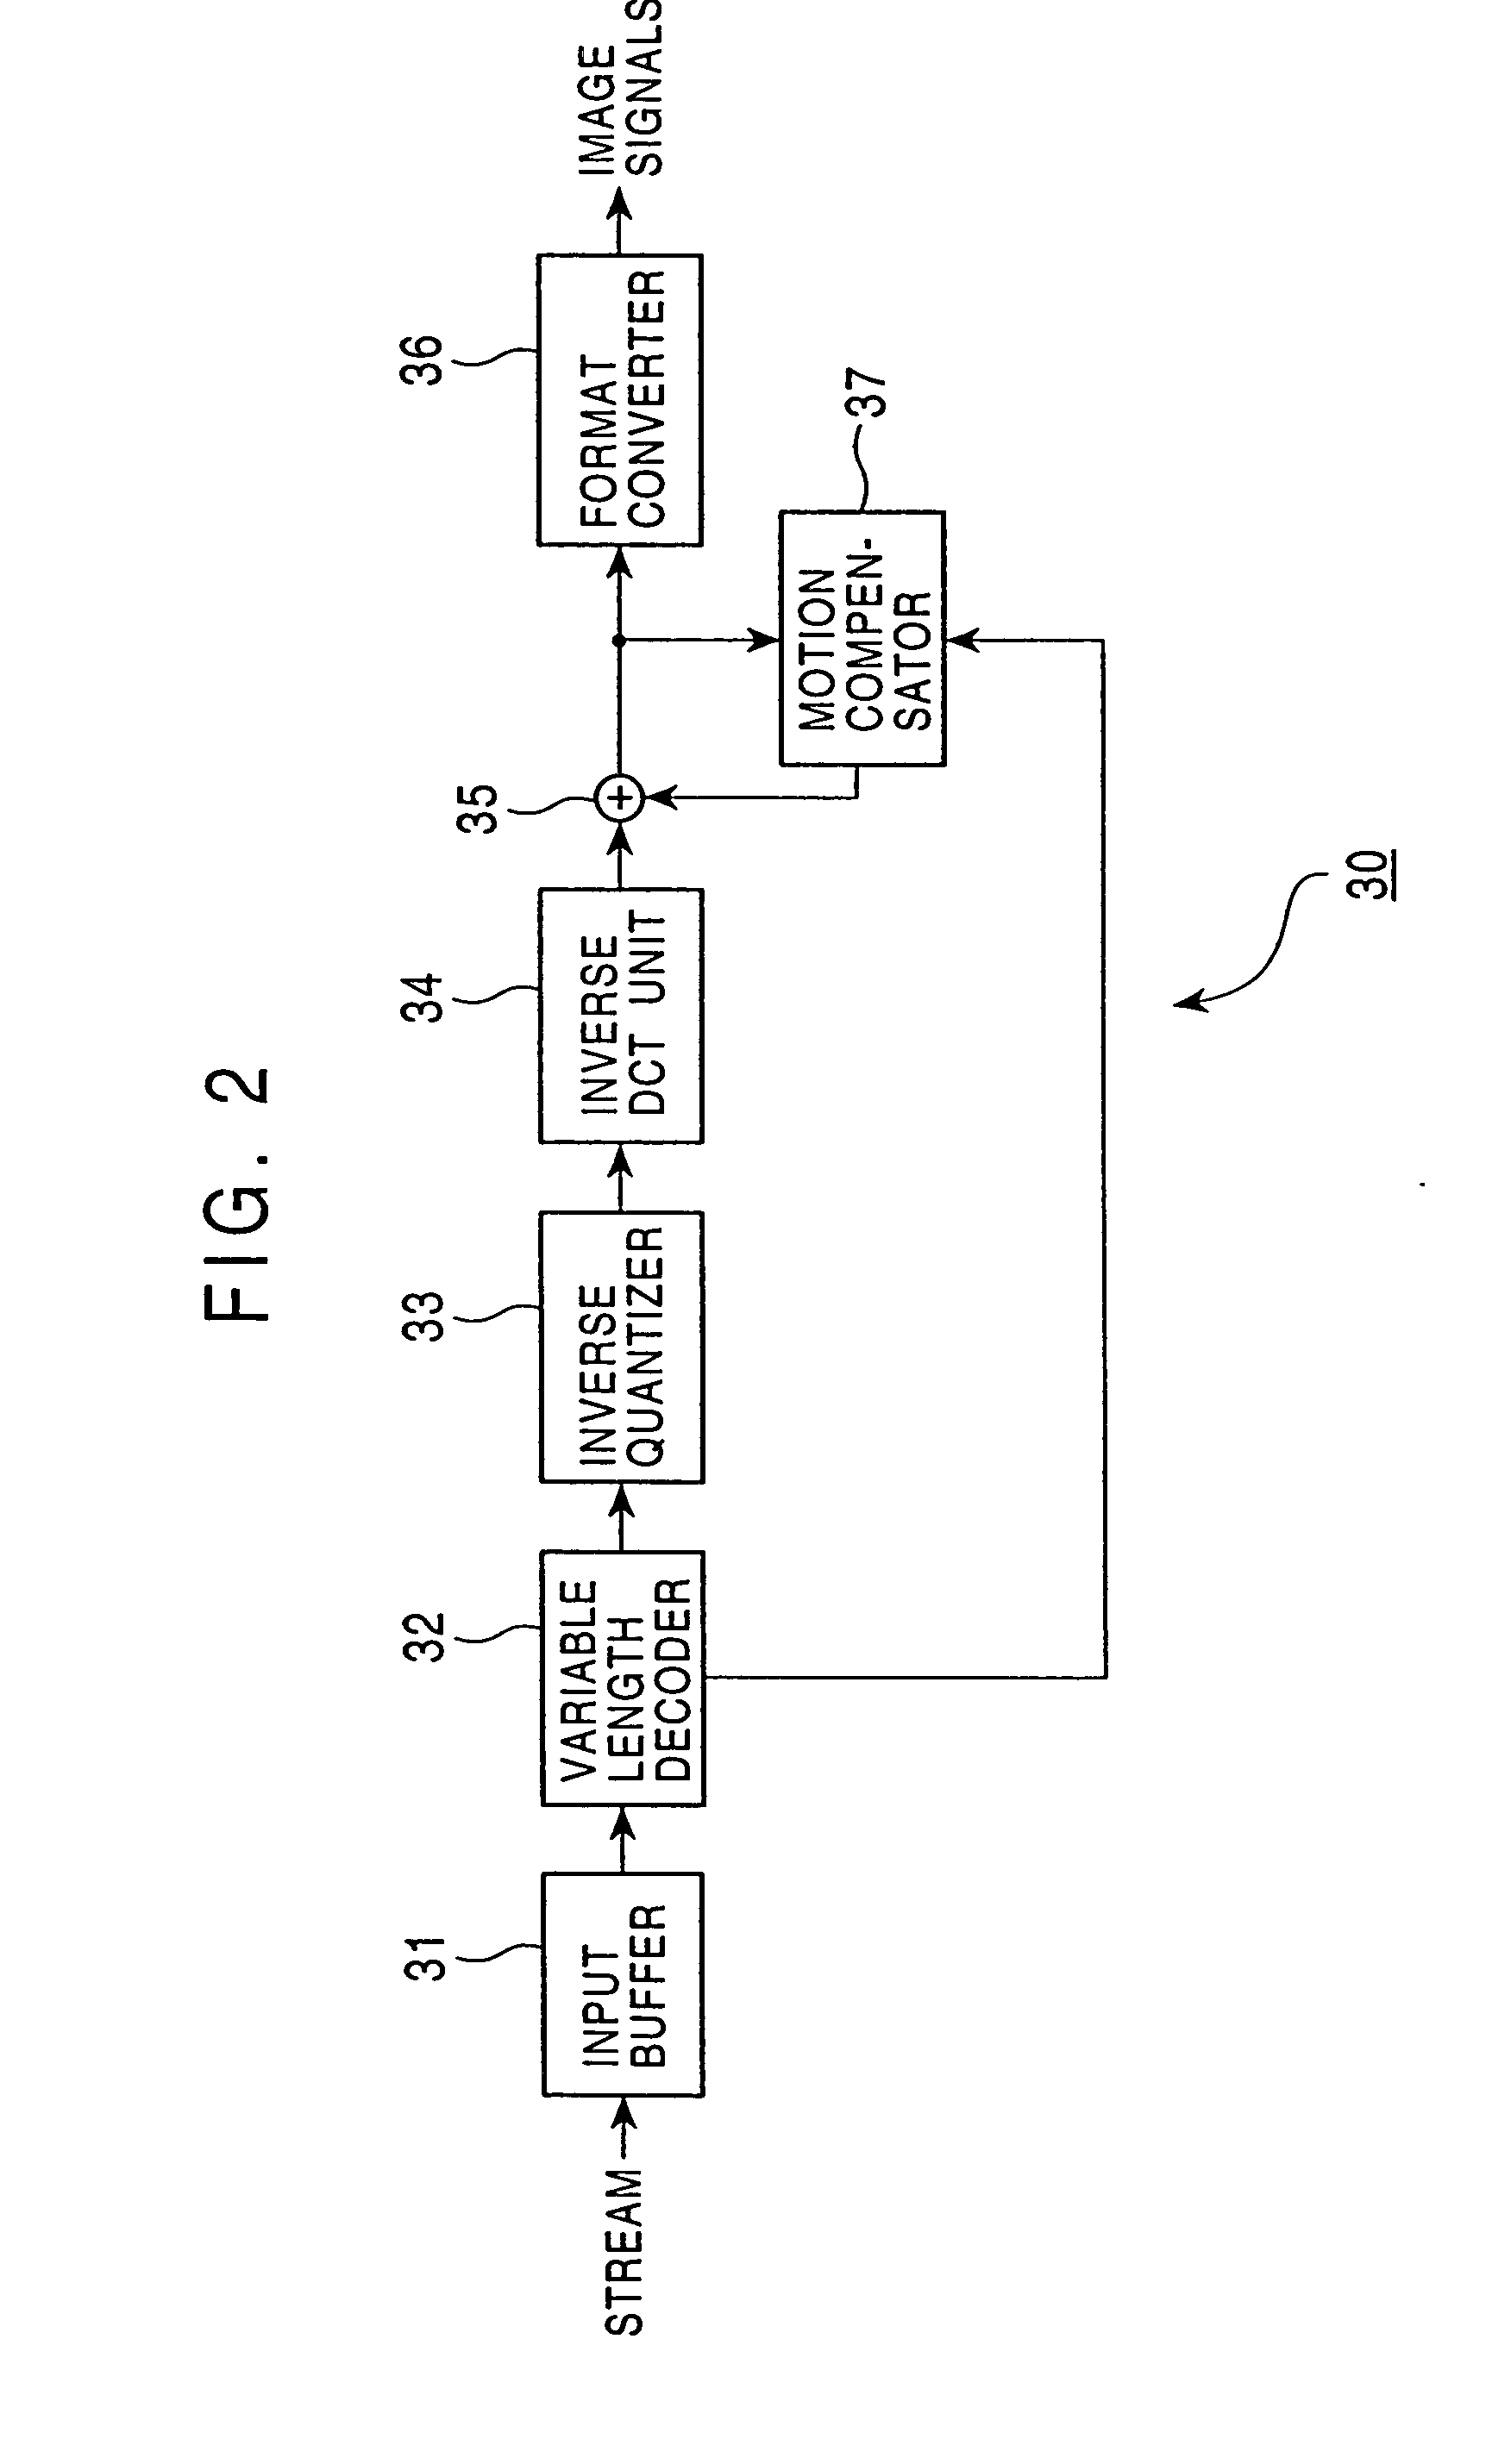 Encoding apparatus and method